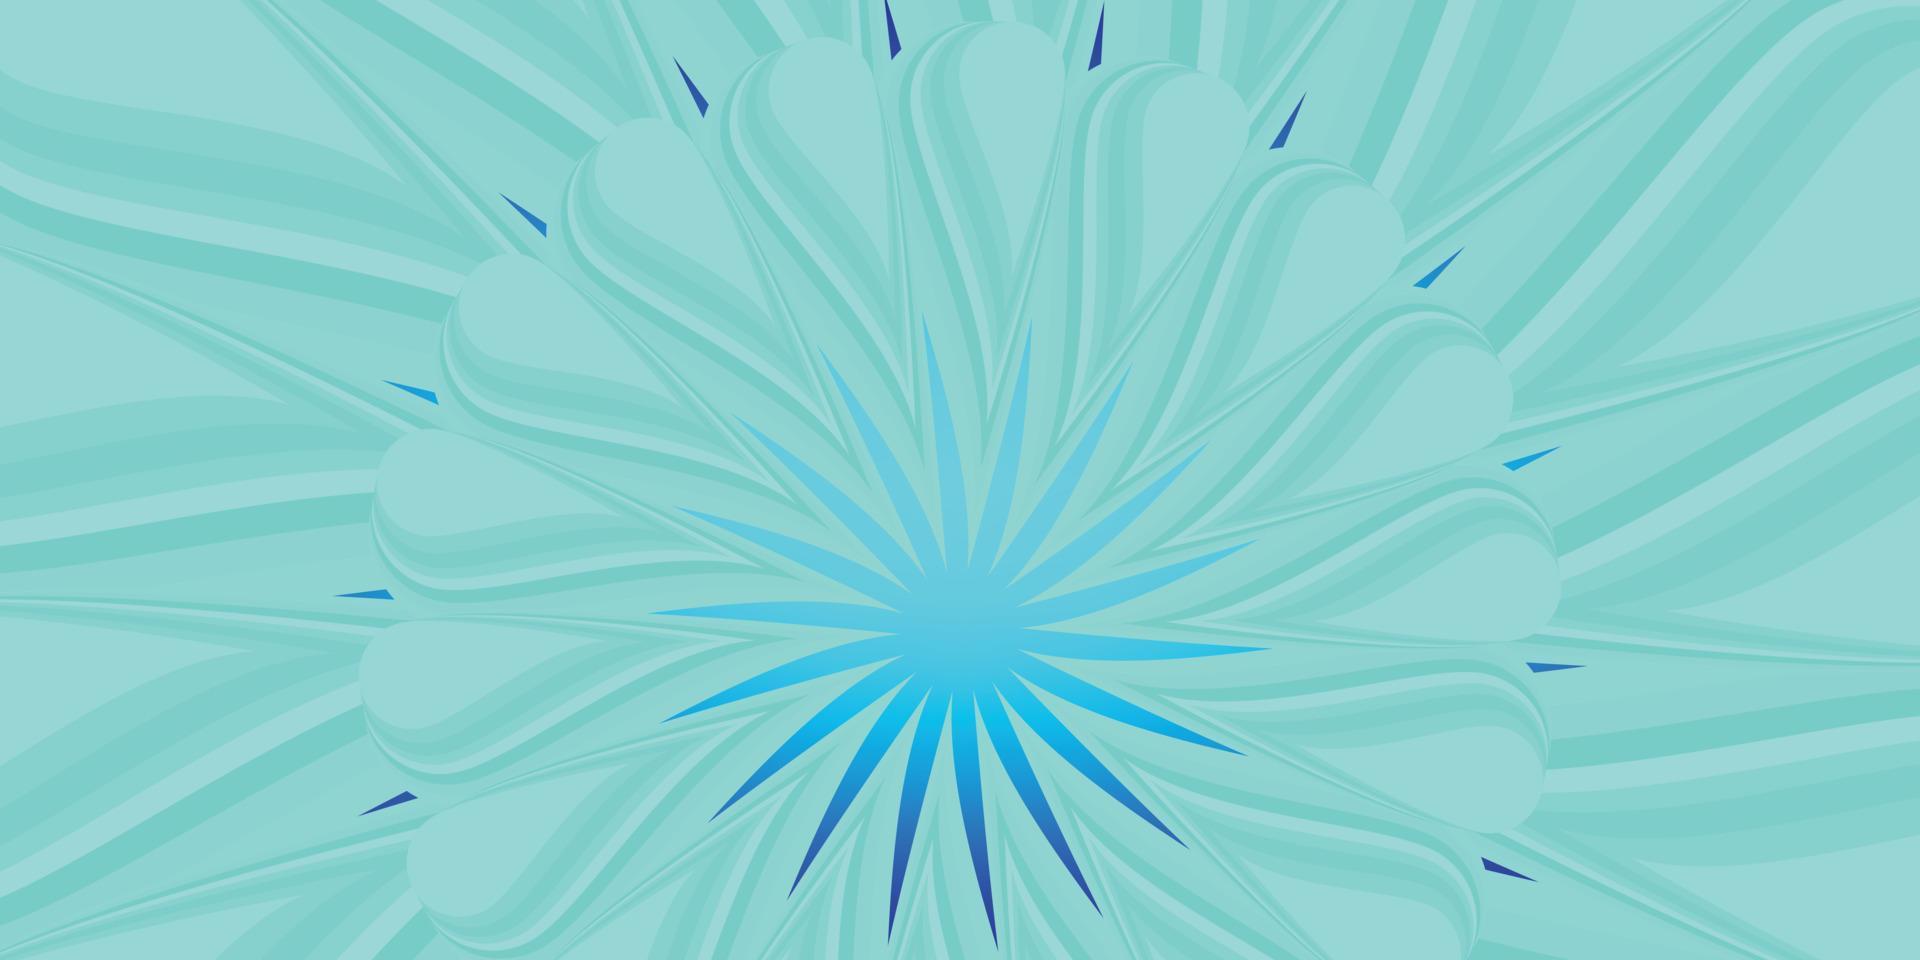 Abstract background texture wallpaper backdrop star flower rays starburst closeup sunbeam art design vector illustration